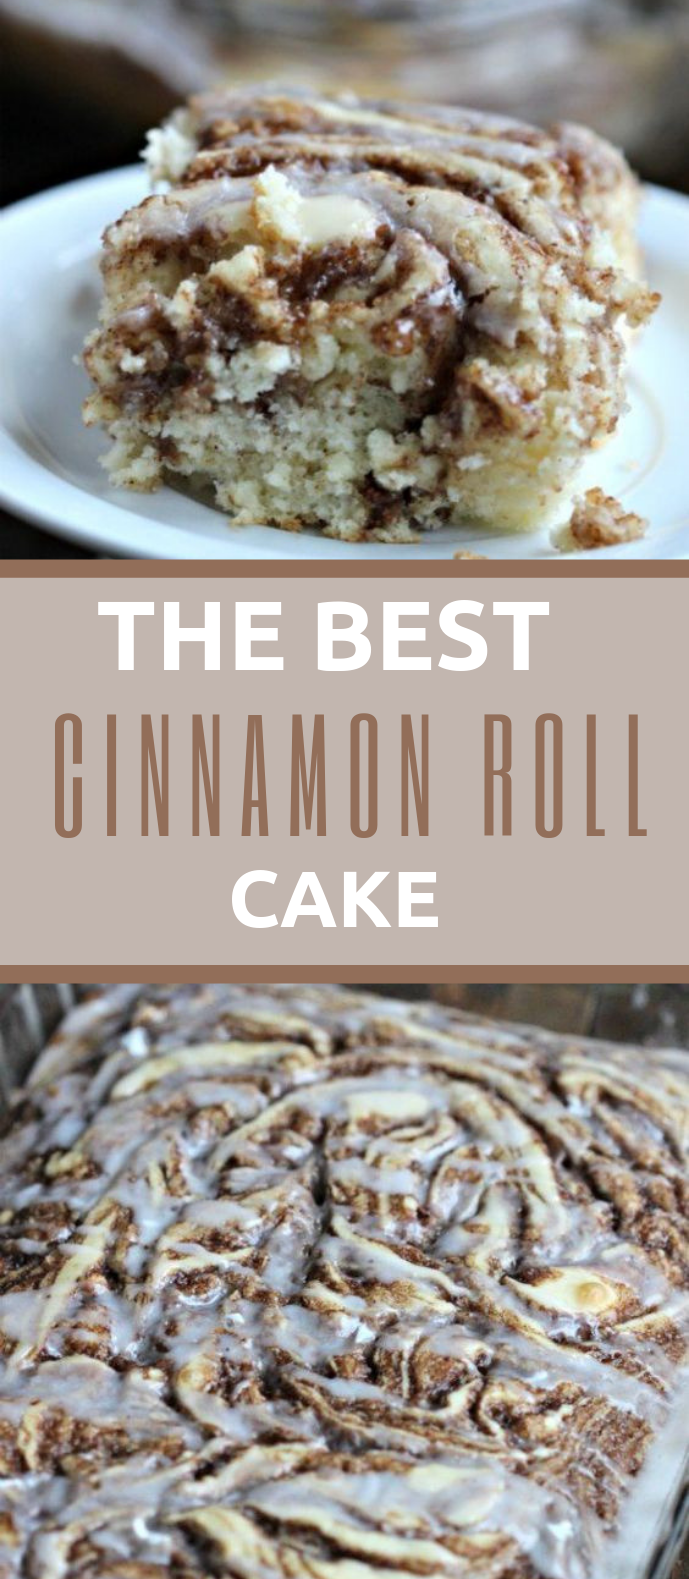 CINNAMON ROLL CAKE RECIPE #healthyrecipe #rollcake